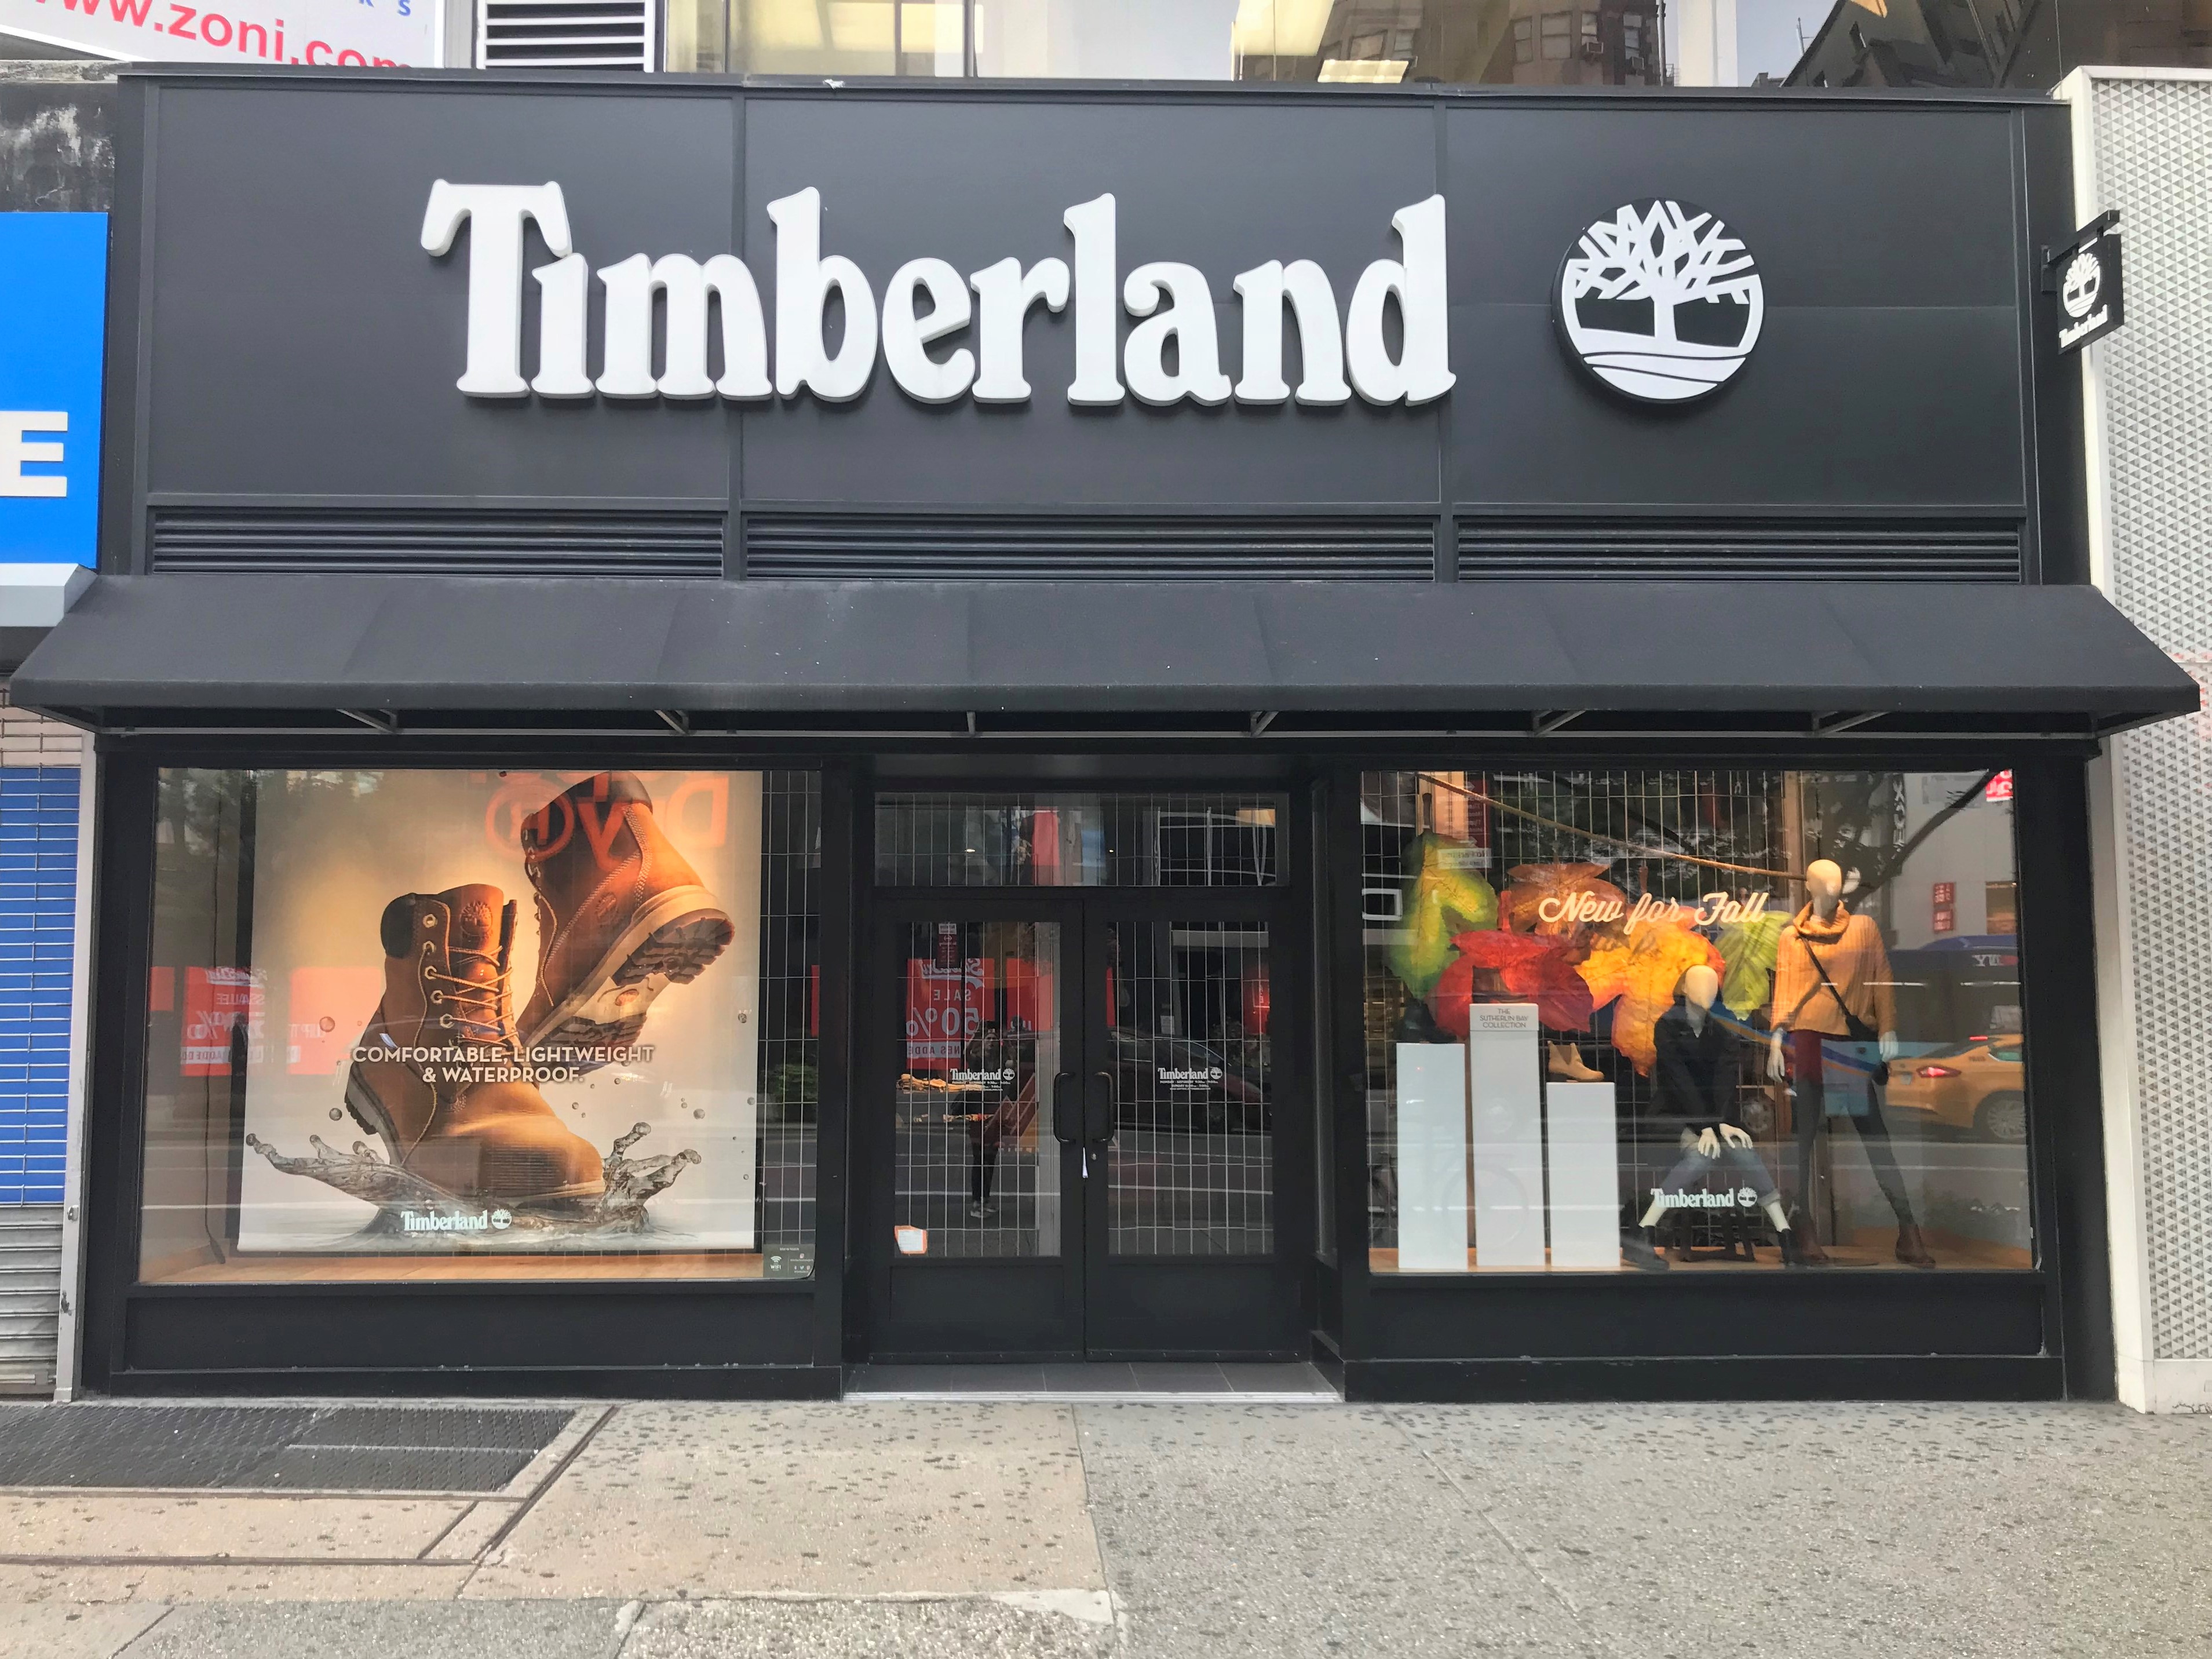 timberland usa online store